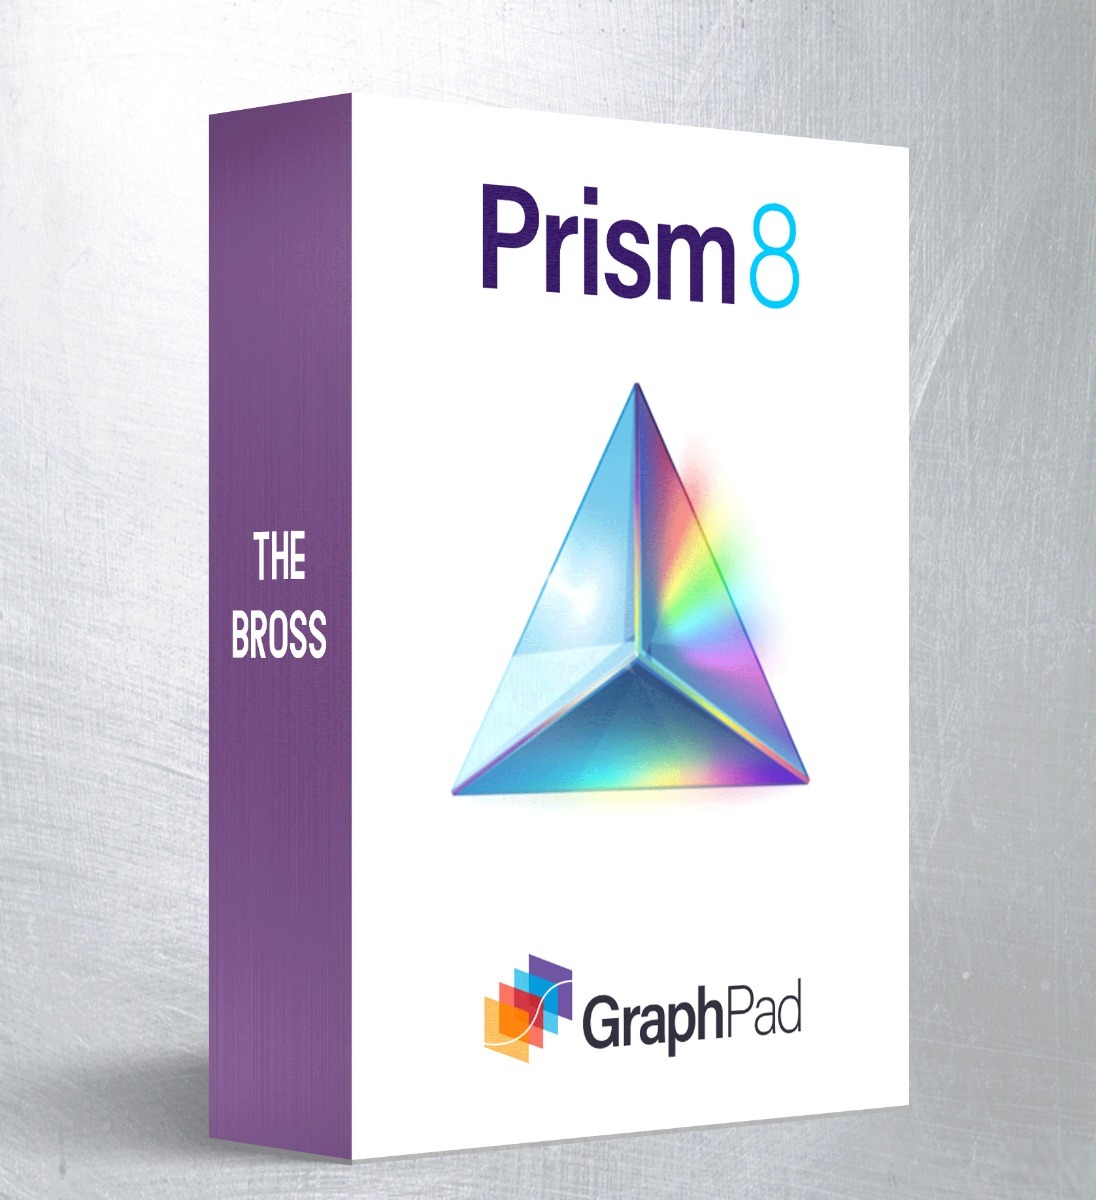 GraphPad Prism 8